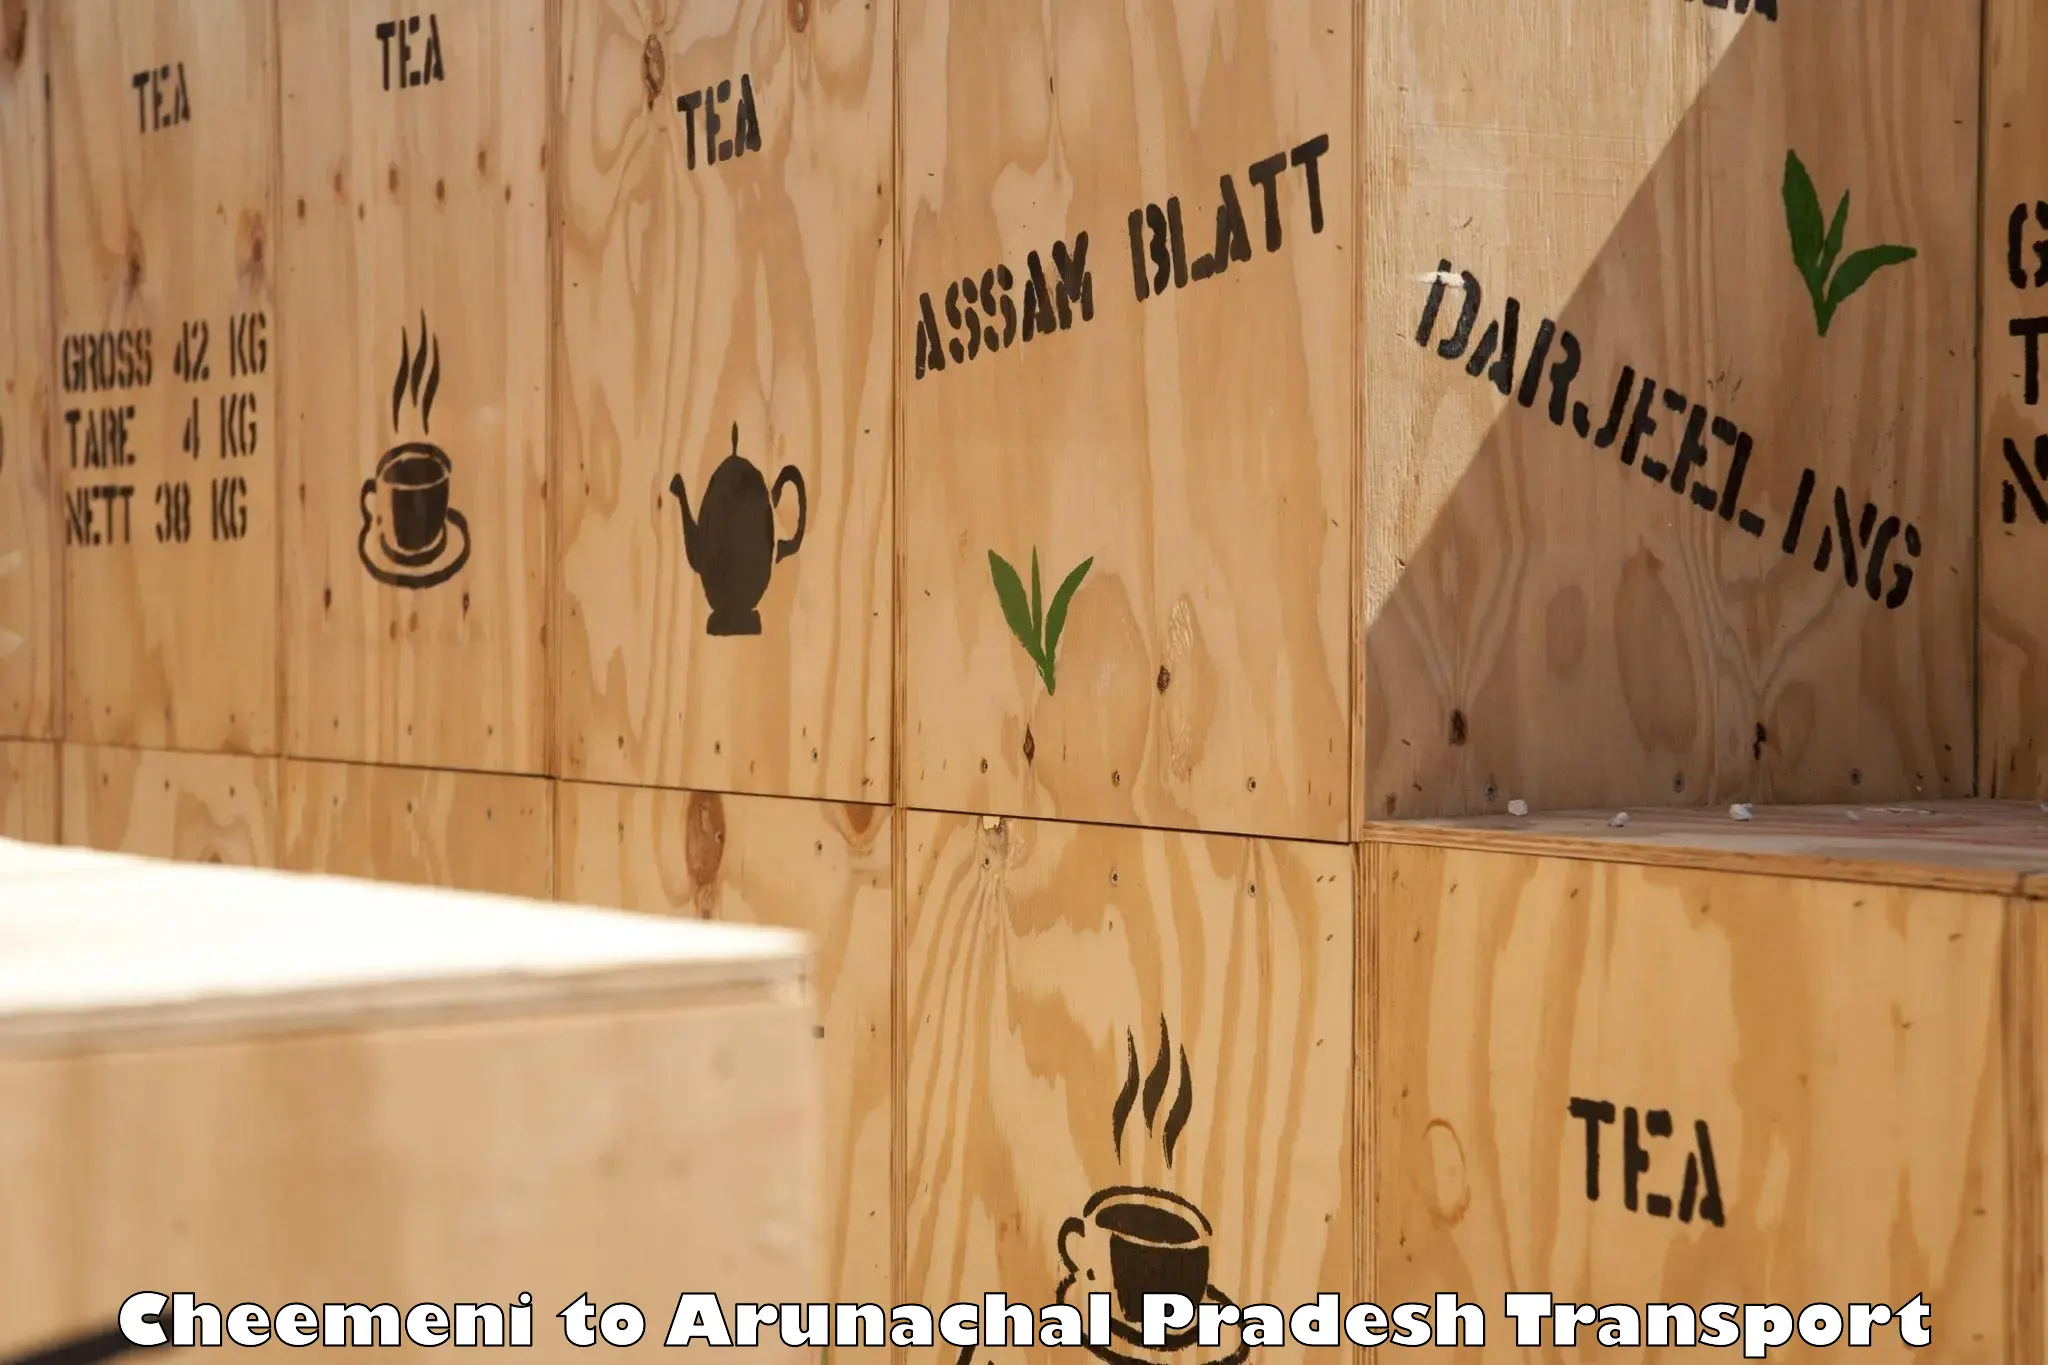 Delivery service Cheemeni to Arunachal Pradesh